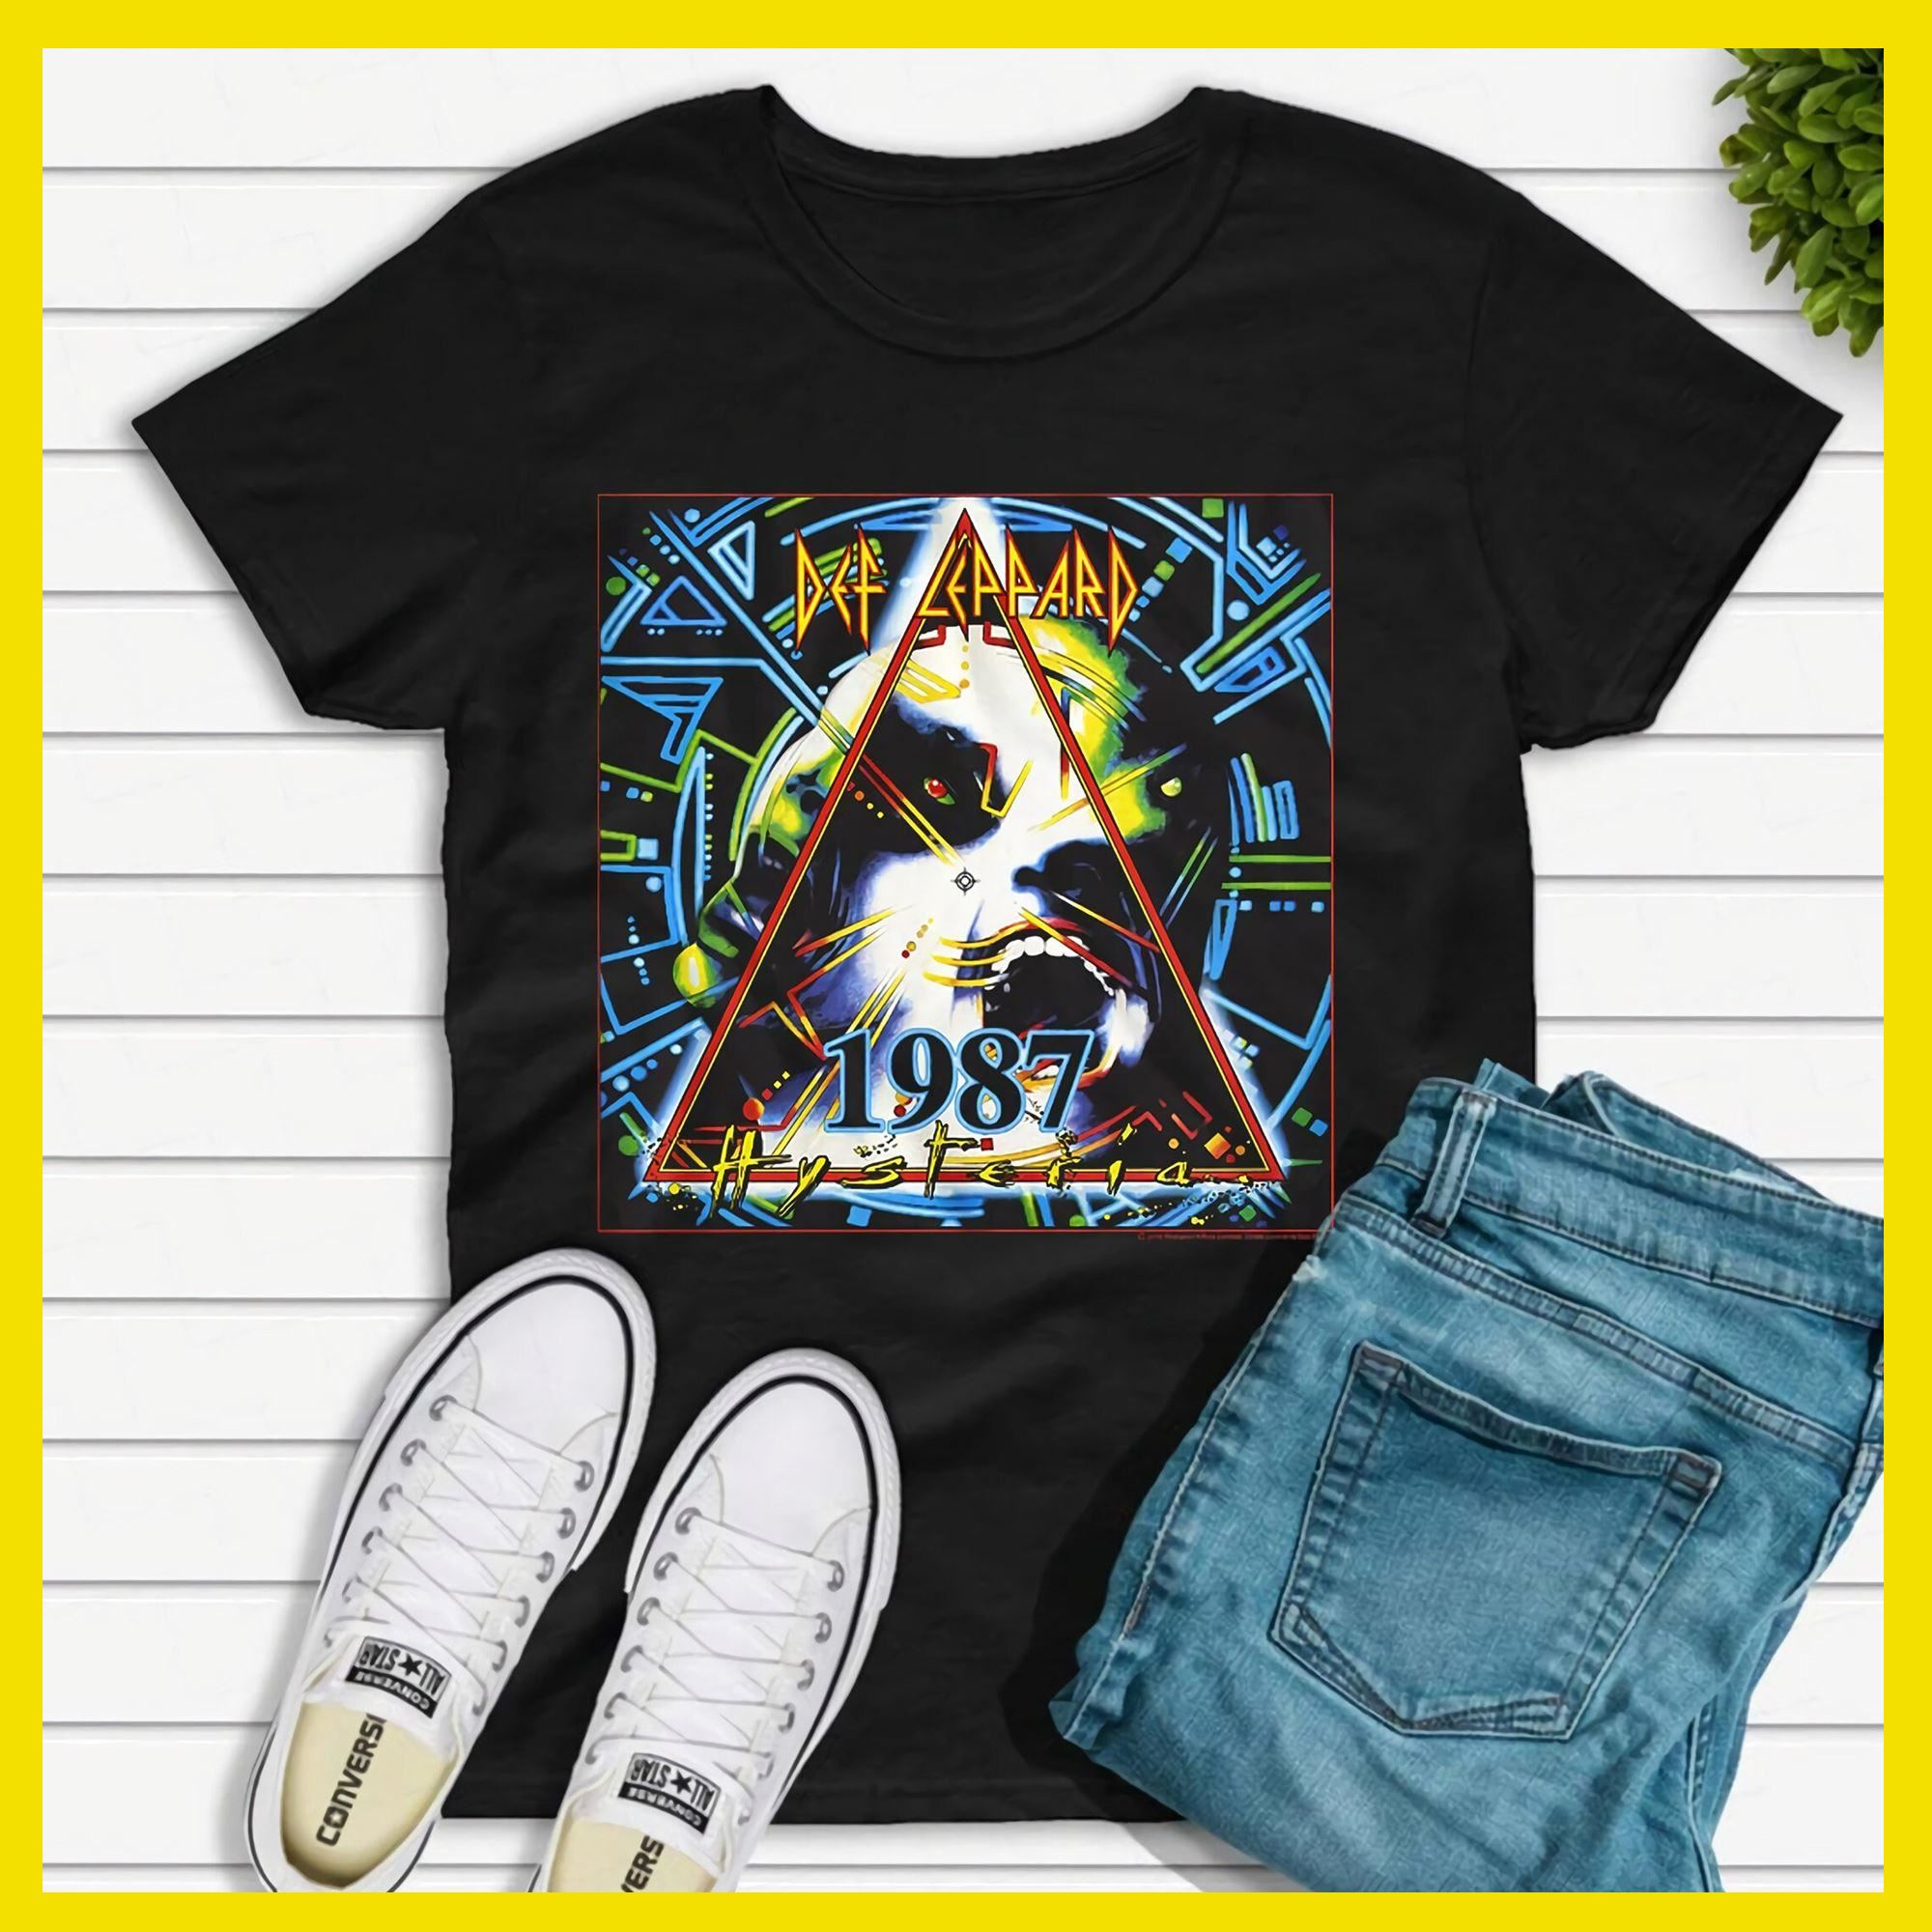 1987 World Tour Def Leppard T-shirt Def Lep'pard Shirt Fan Gifts Def Leppard Tour Shirt Def Leppard Band Tee Def Leppard Vintage Shirt